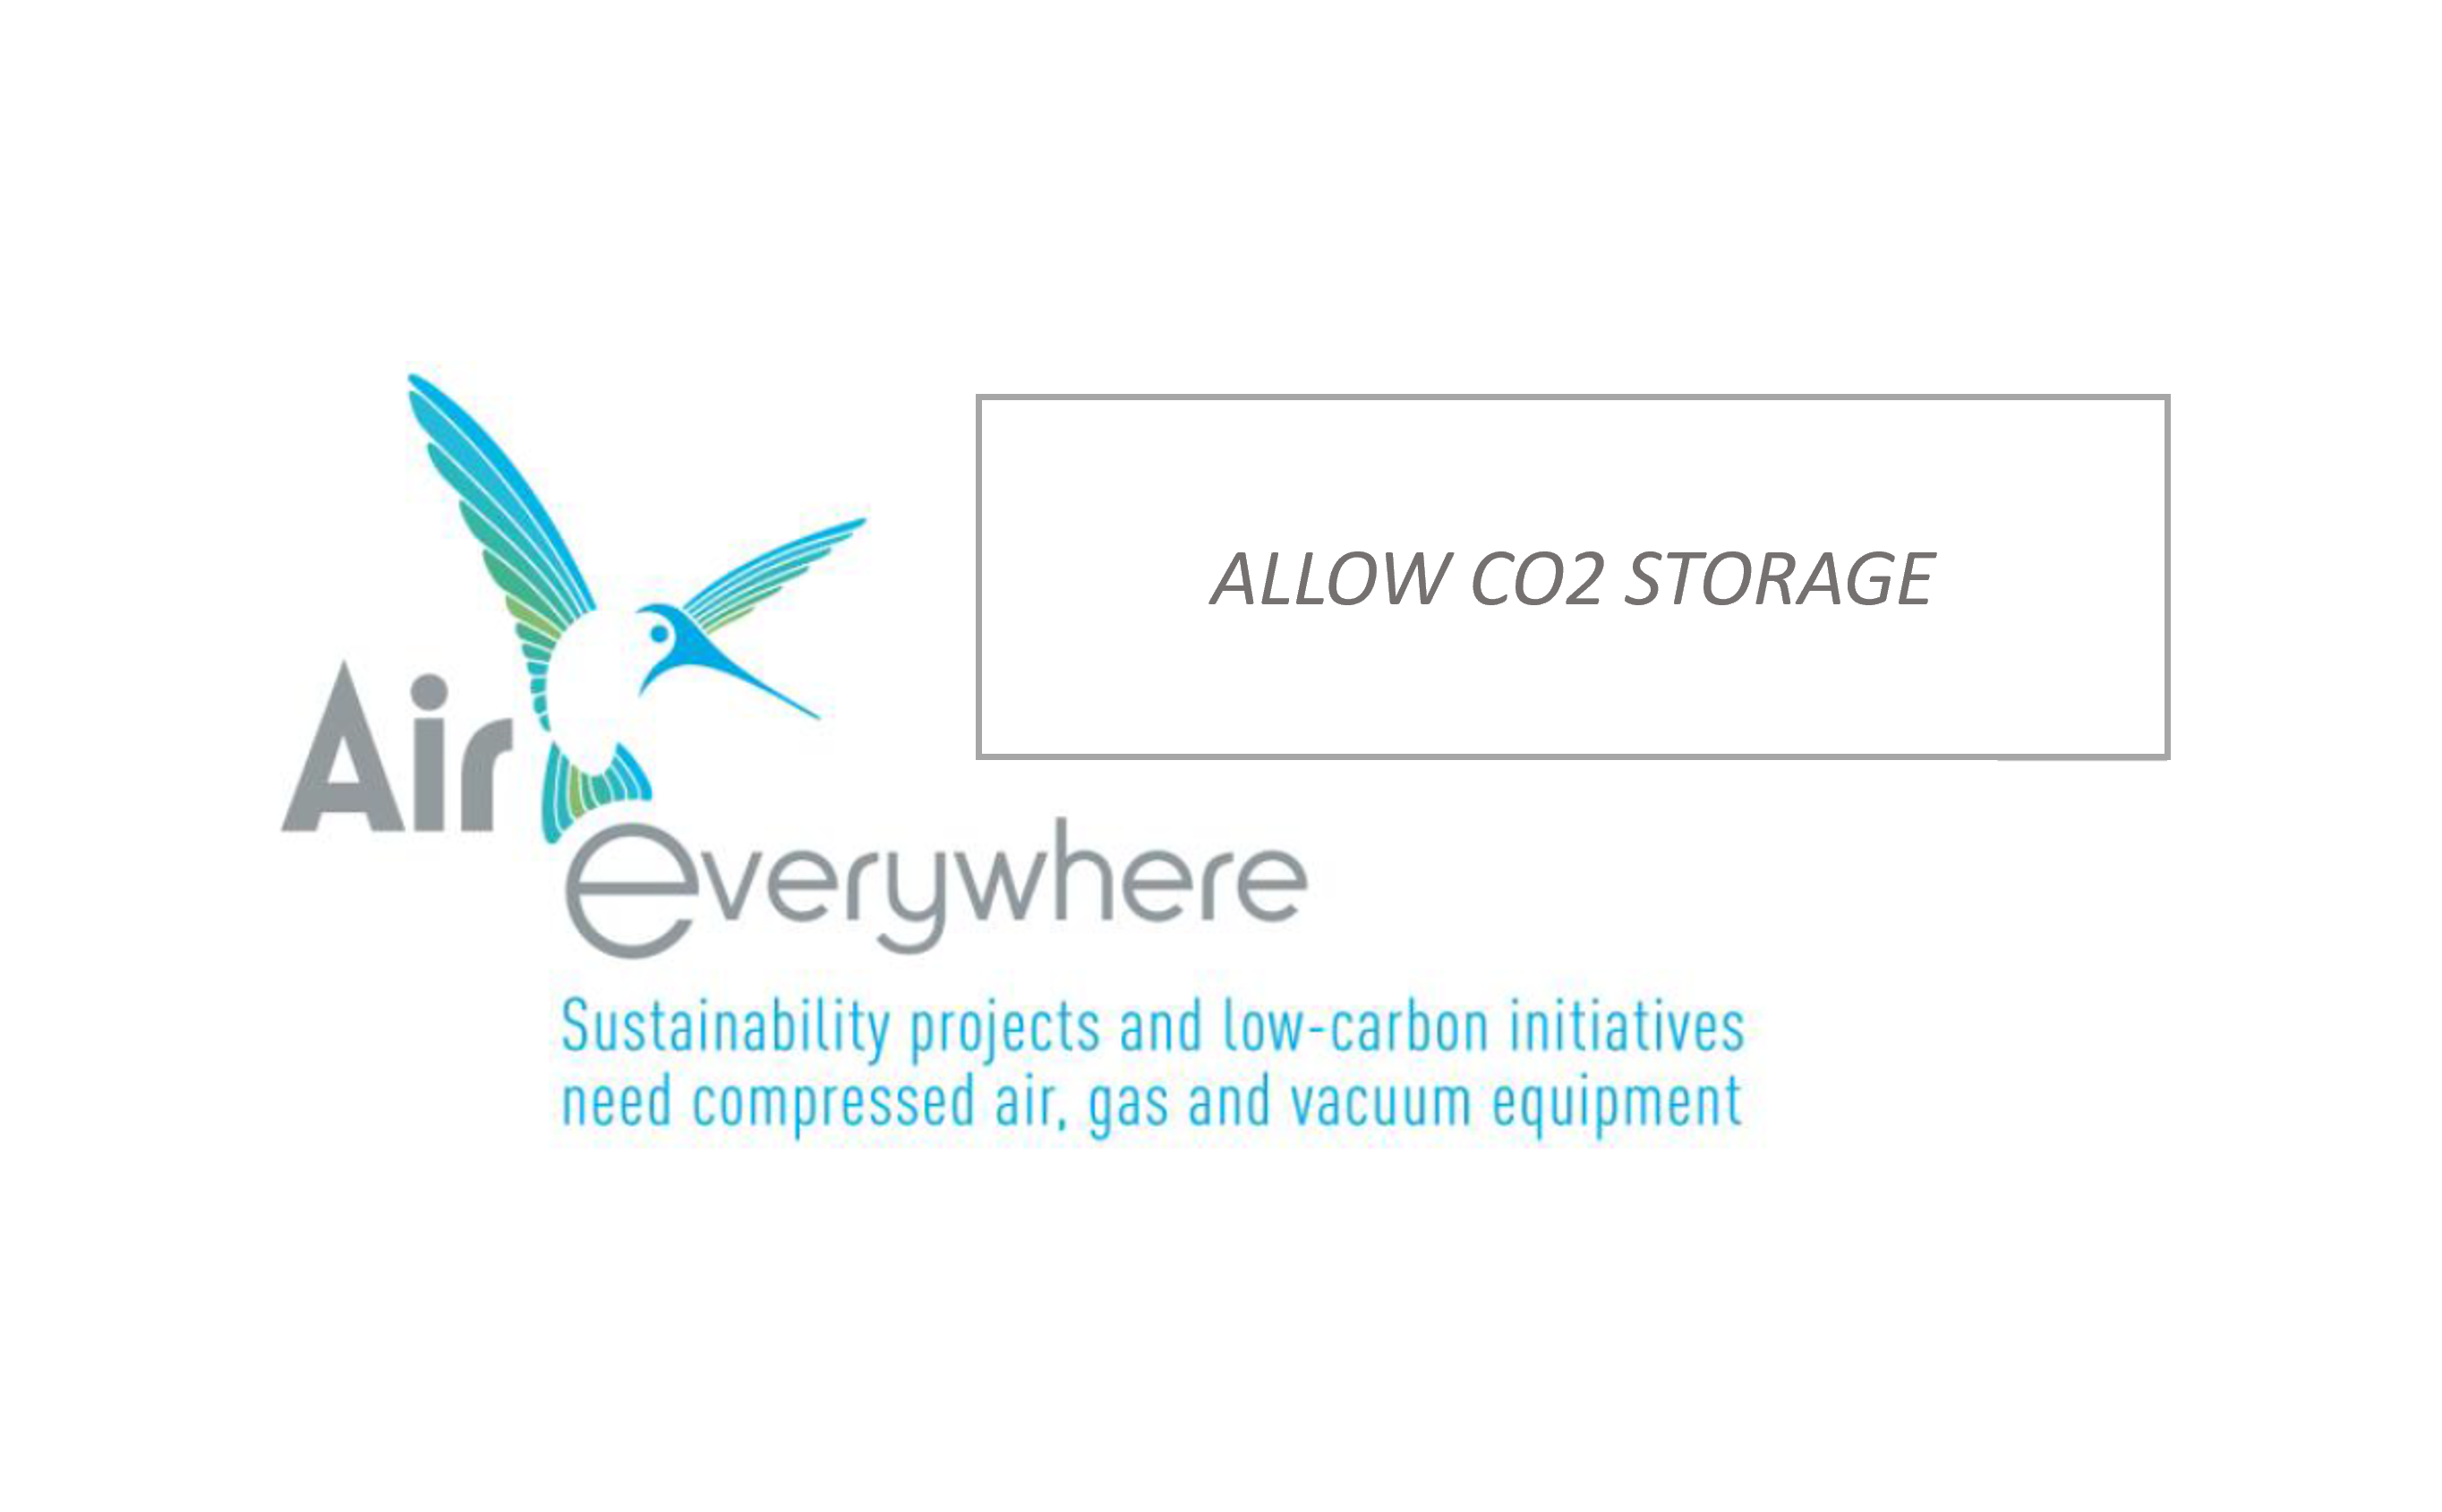 Allow CO2 storage